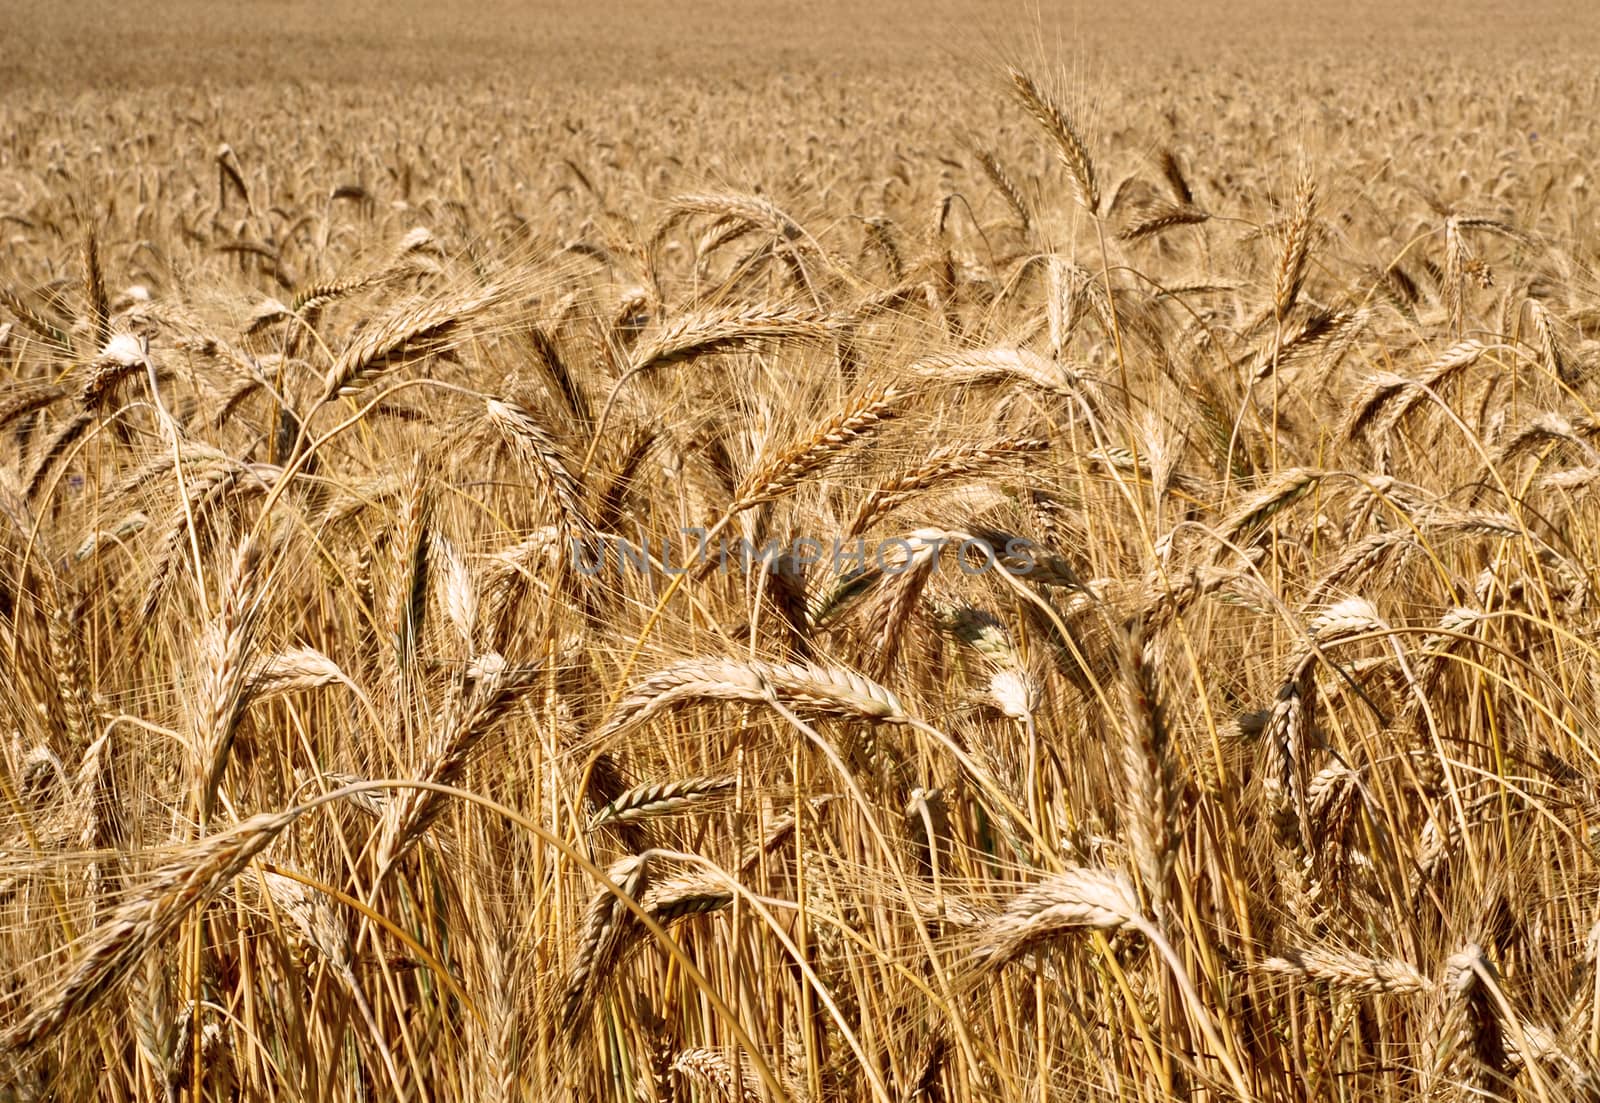 ripe ears of grain, field crops in August before harvest